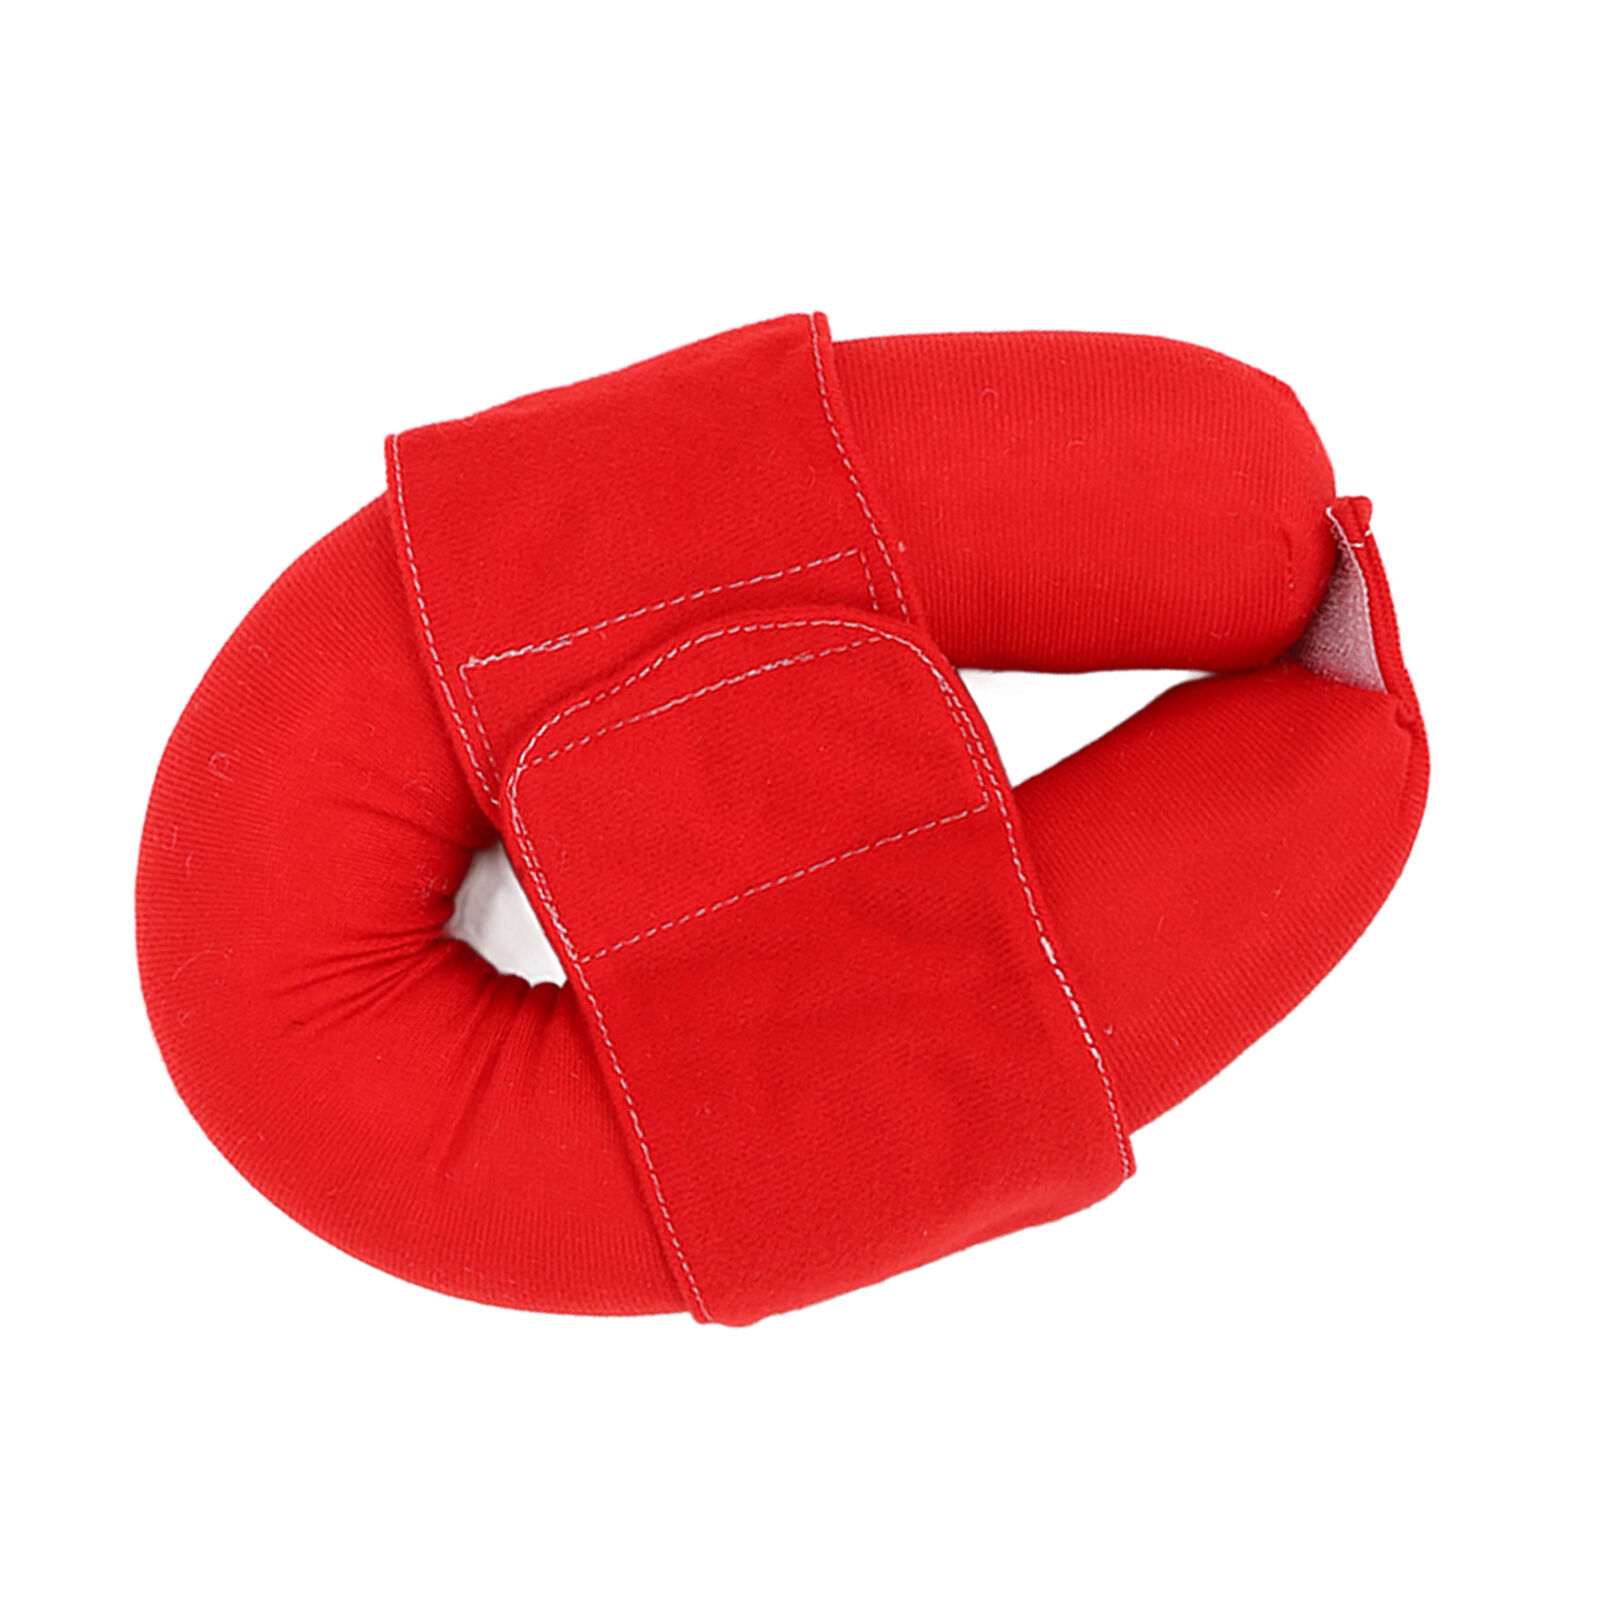 Bedsore Cushion Cotton Pressure Reduction Ergonomic Pressure Sore Cushion For He